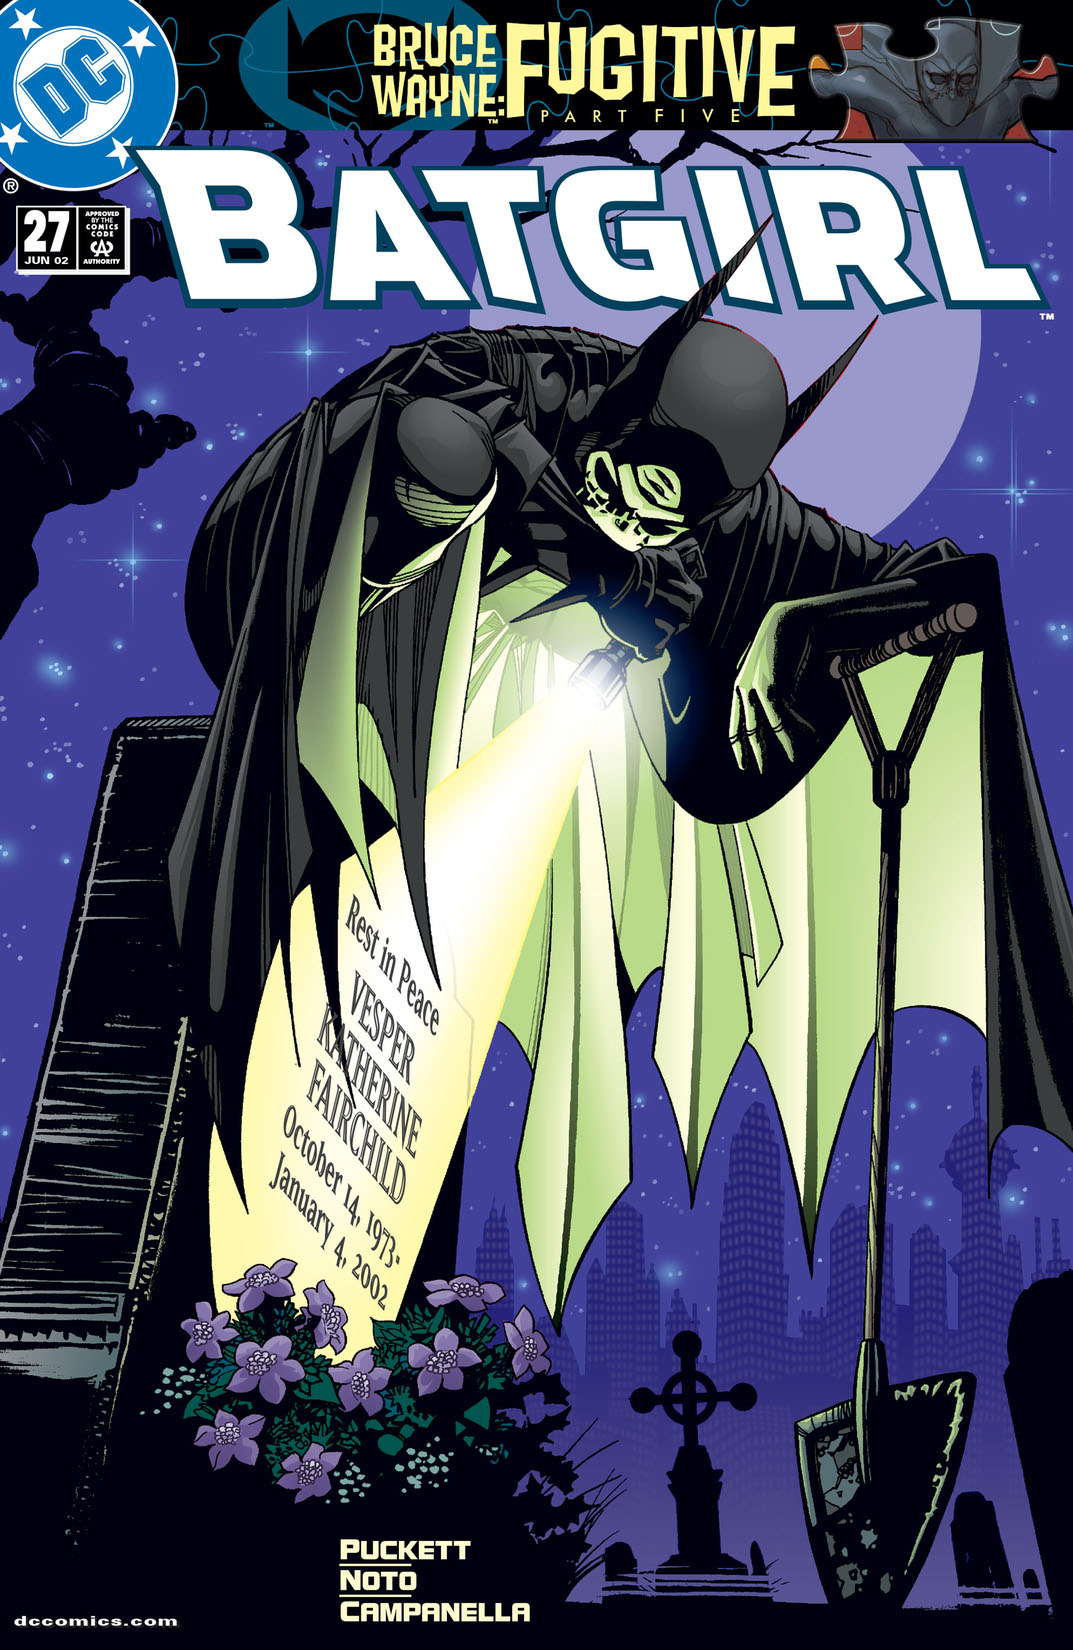 Batgirl (2000-) #27 preview images